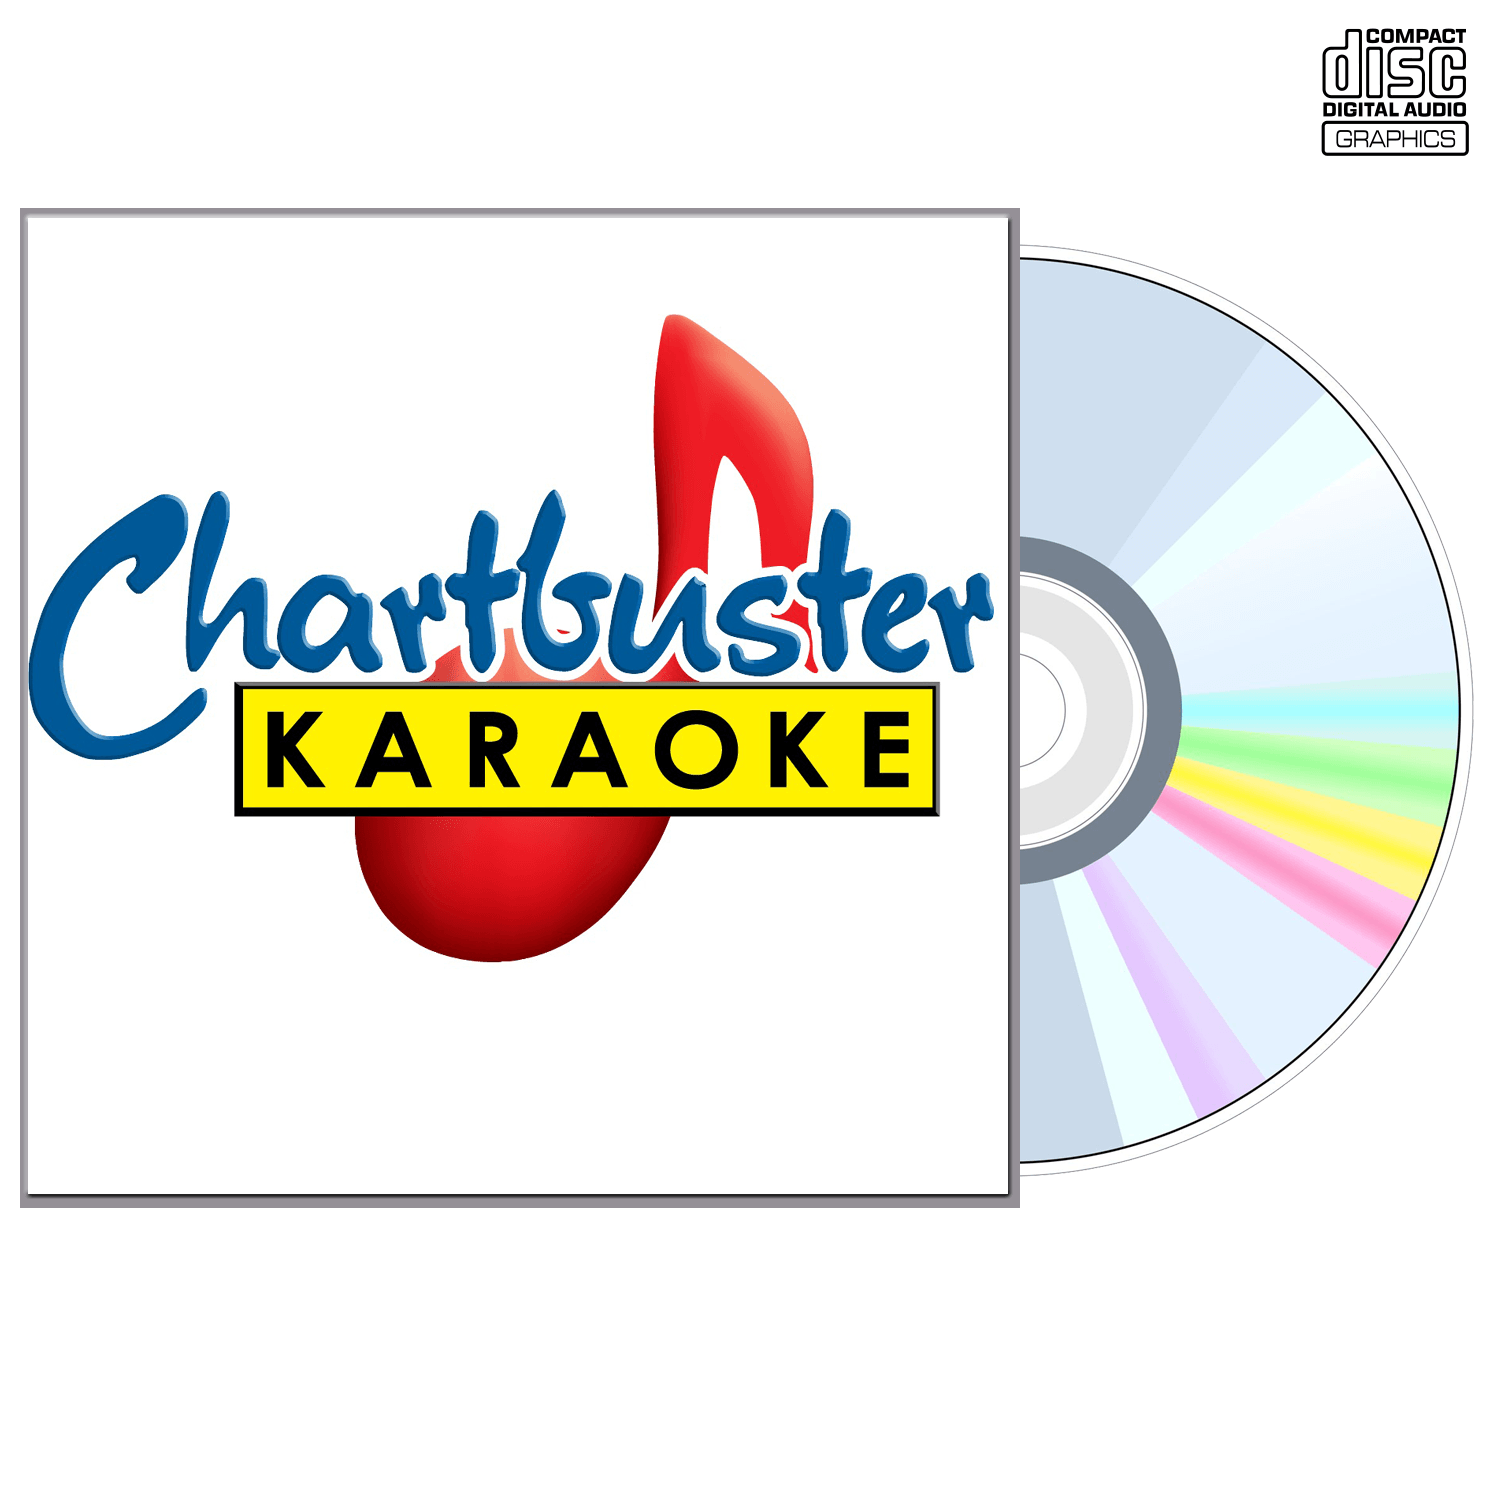 Colbie Caillat - CD+G - Chartbuster Karaoke - Karaoke Home Entertainment